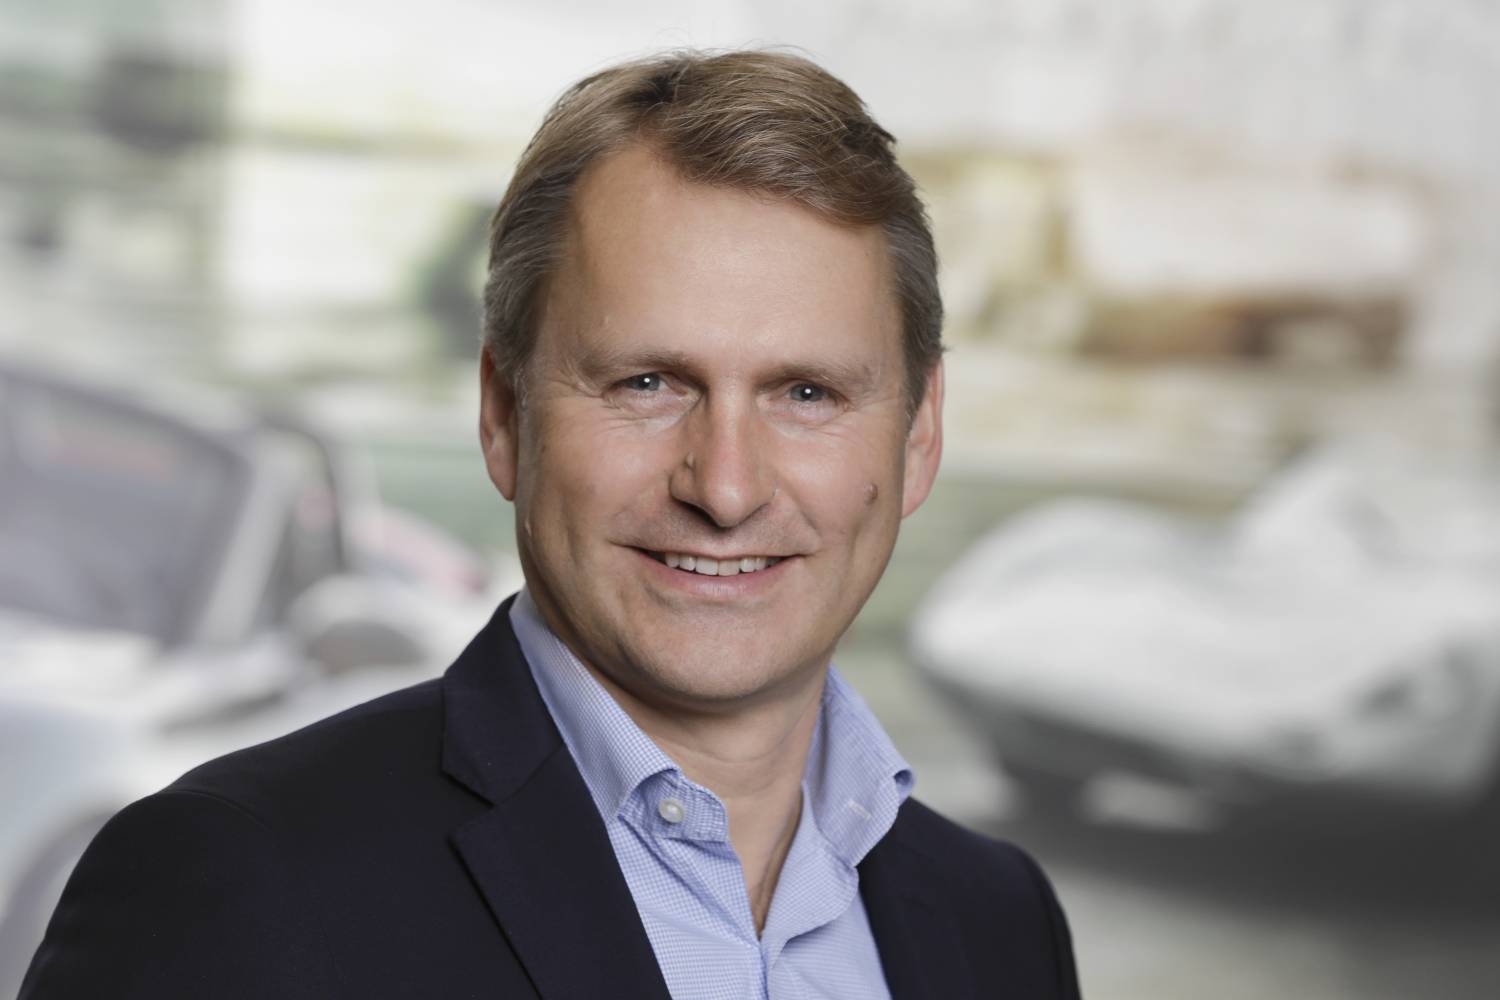 Matthias Ulbrich, Vice President Information Technology - CIO, Dr. Ing. h.c. F. Porsche AG